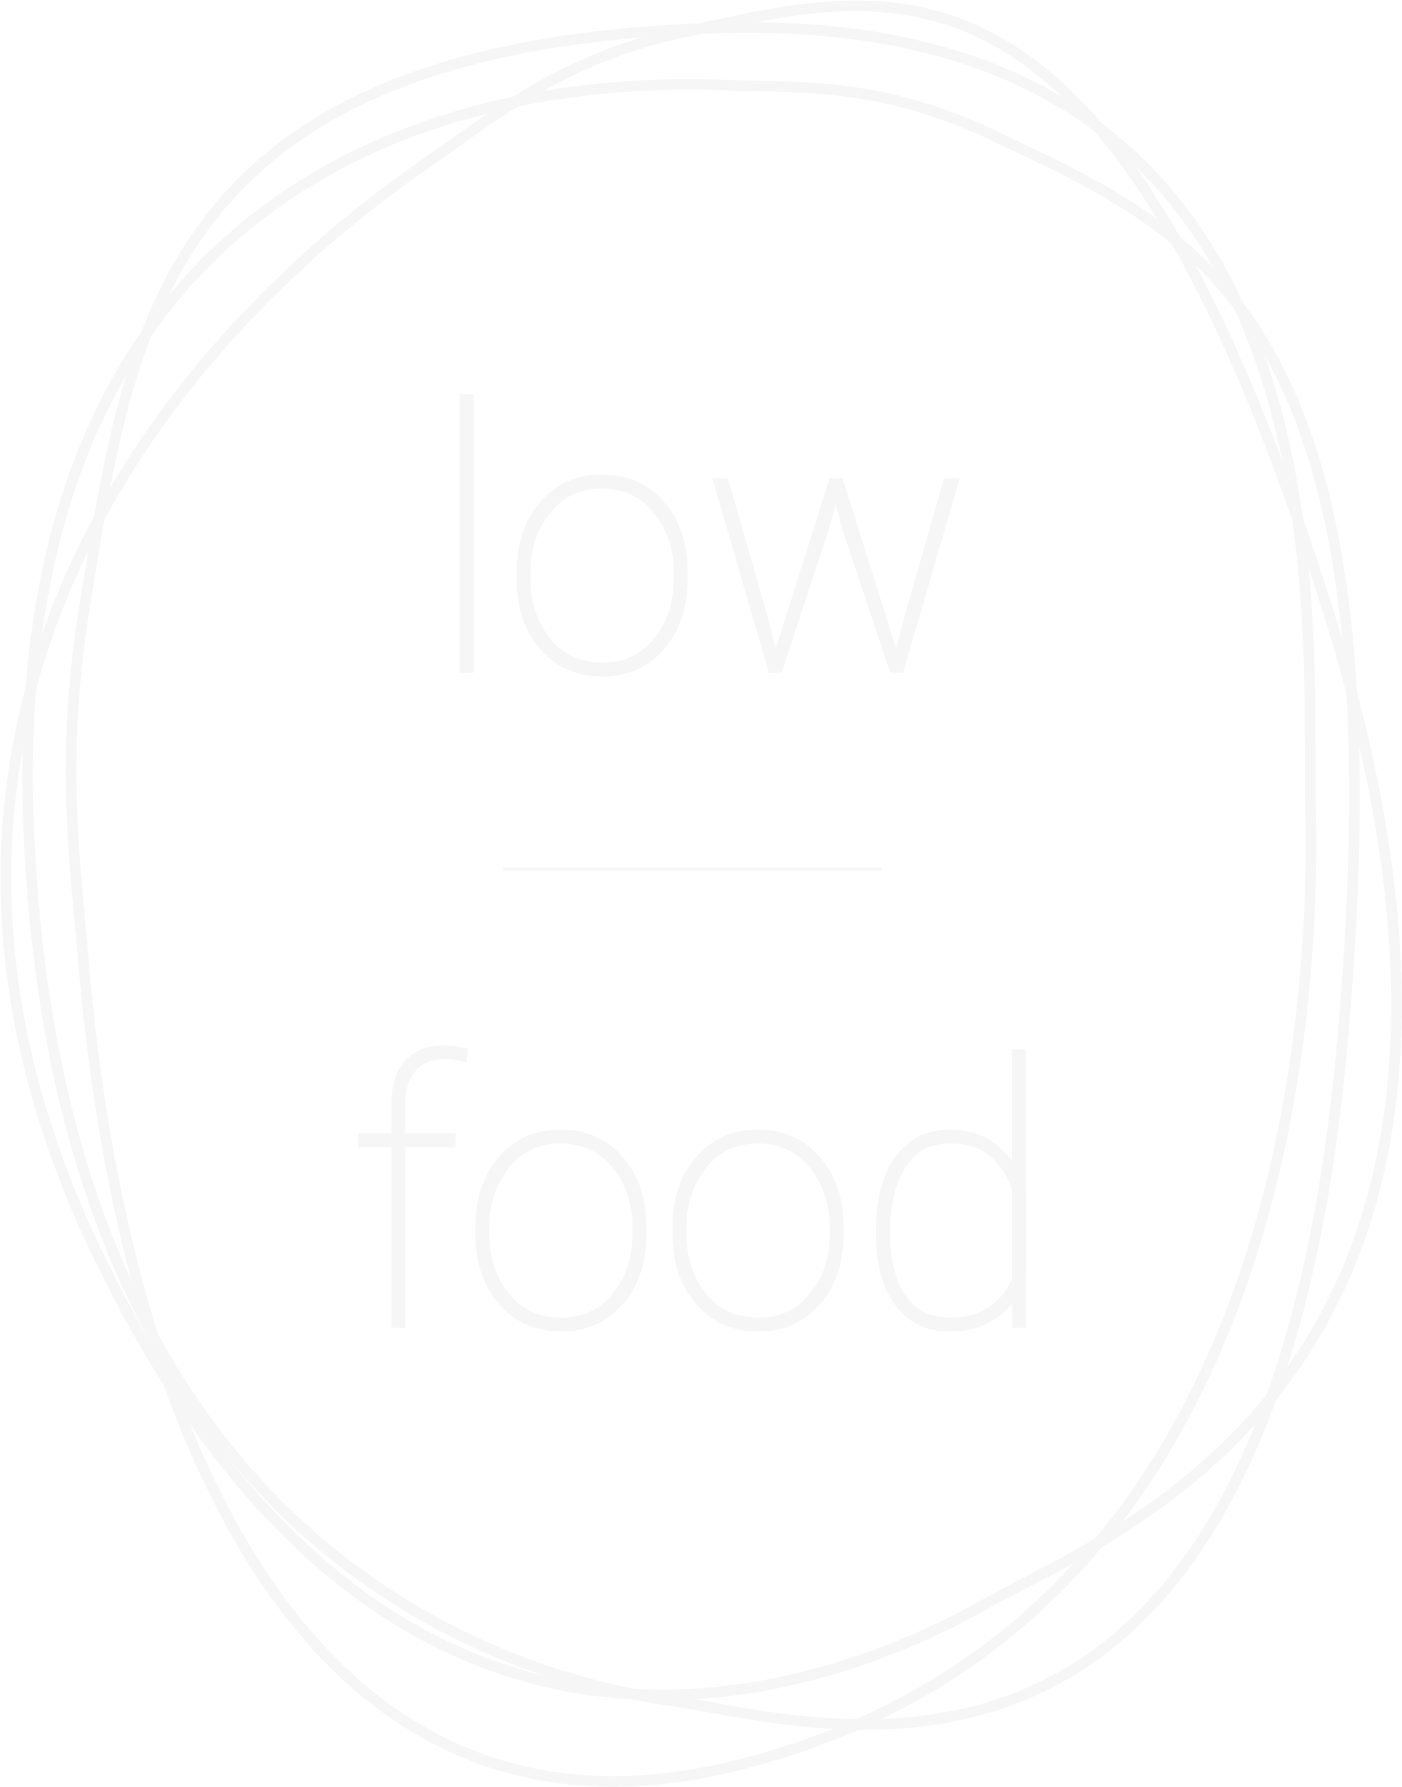 Low Food